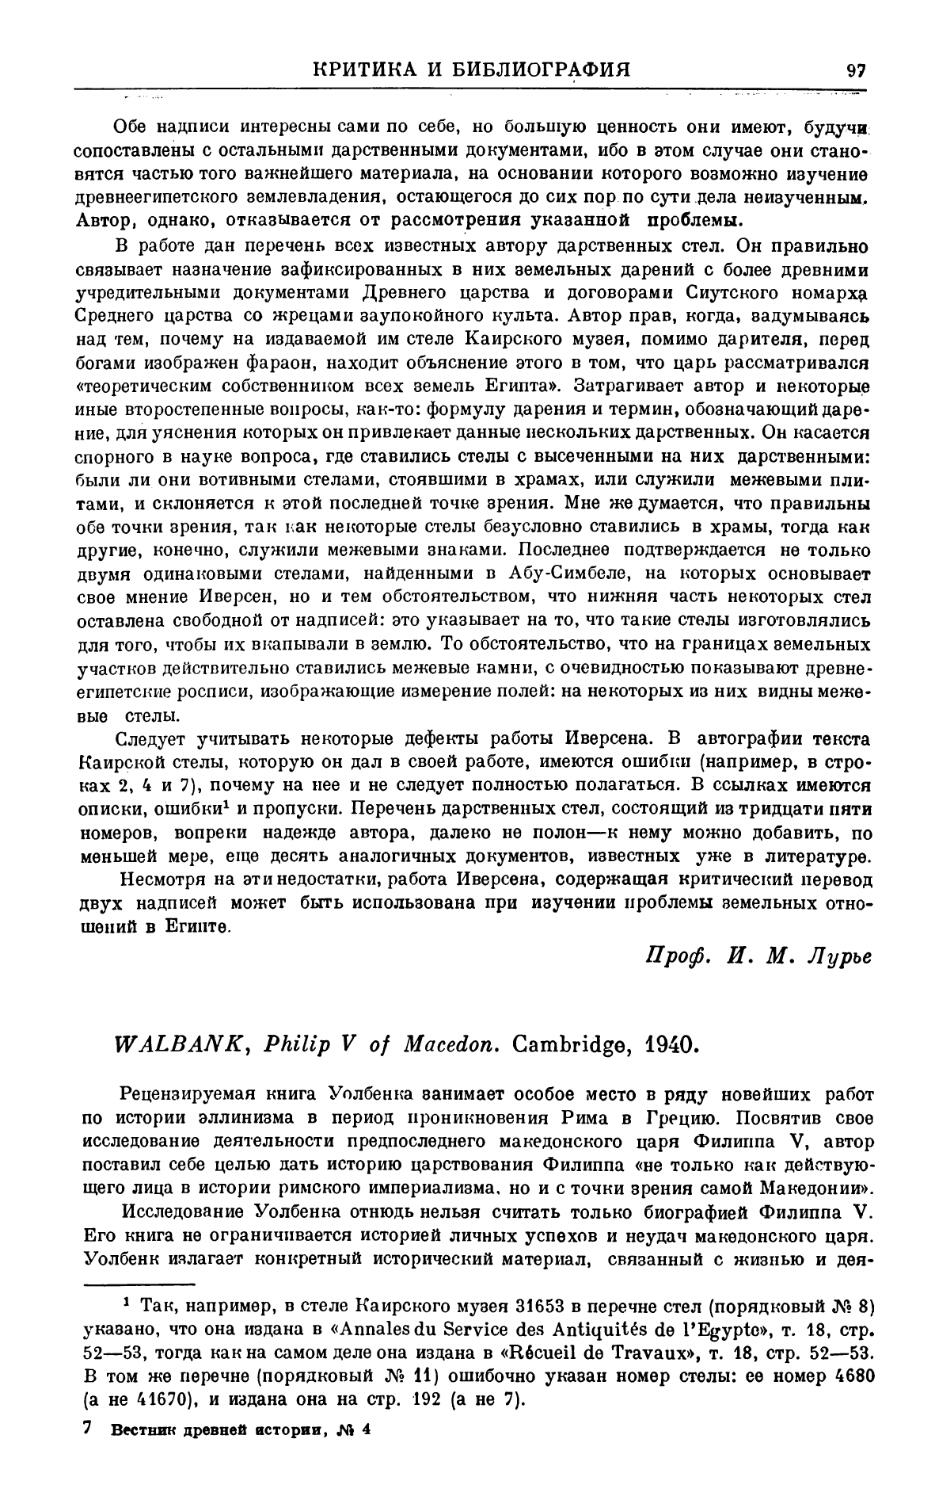 П. Н. Тарков — Walbank, Philip V of Macedon